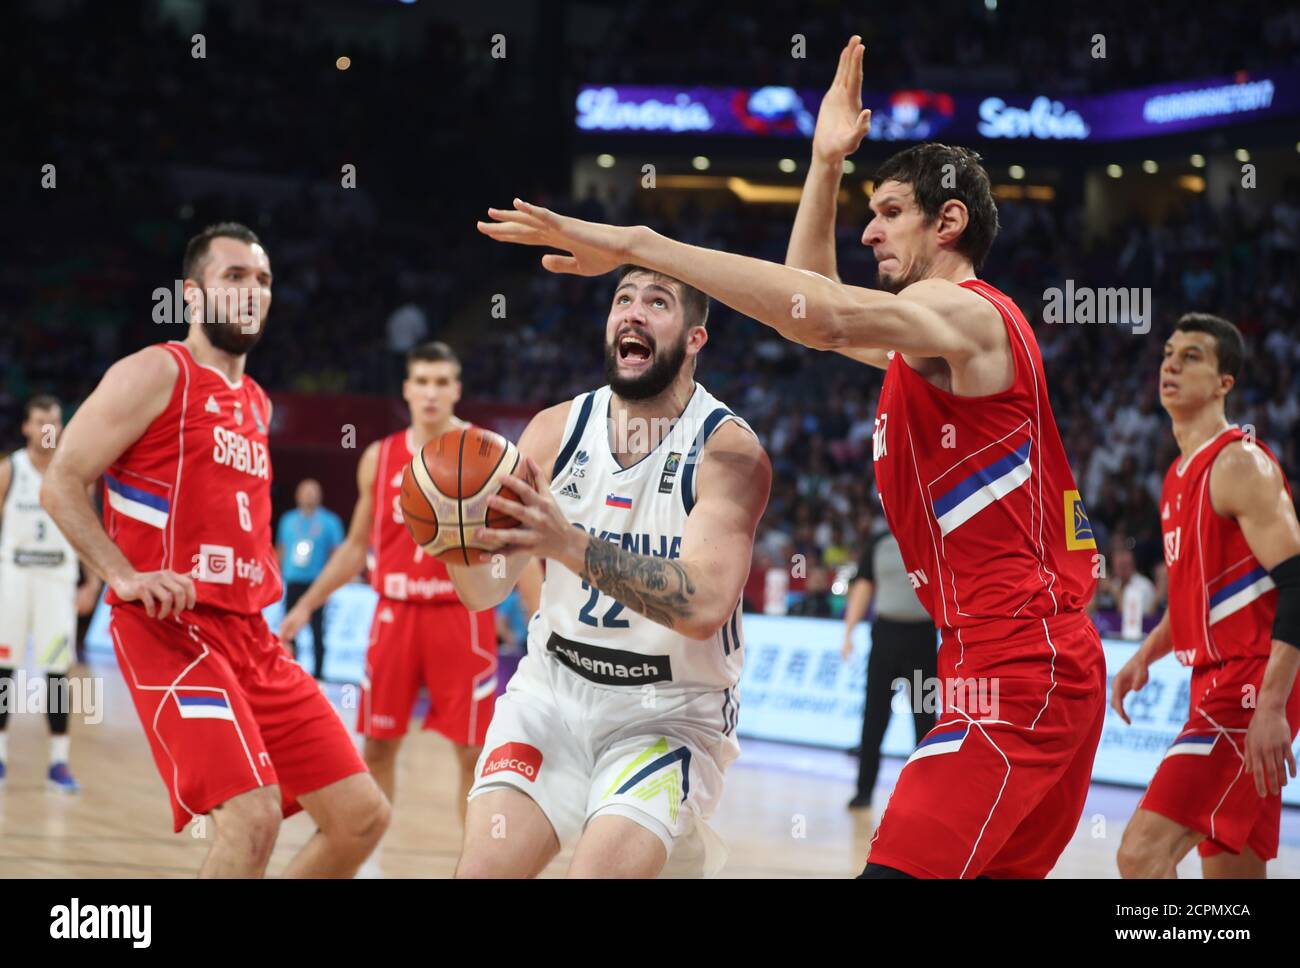 Baloncesto - Eslovenia contra Serbia - Campeonato Europeo EuroBasket 2017  final - Estambul, Turquía - 17 de septiembre de 2017 -